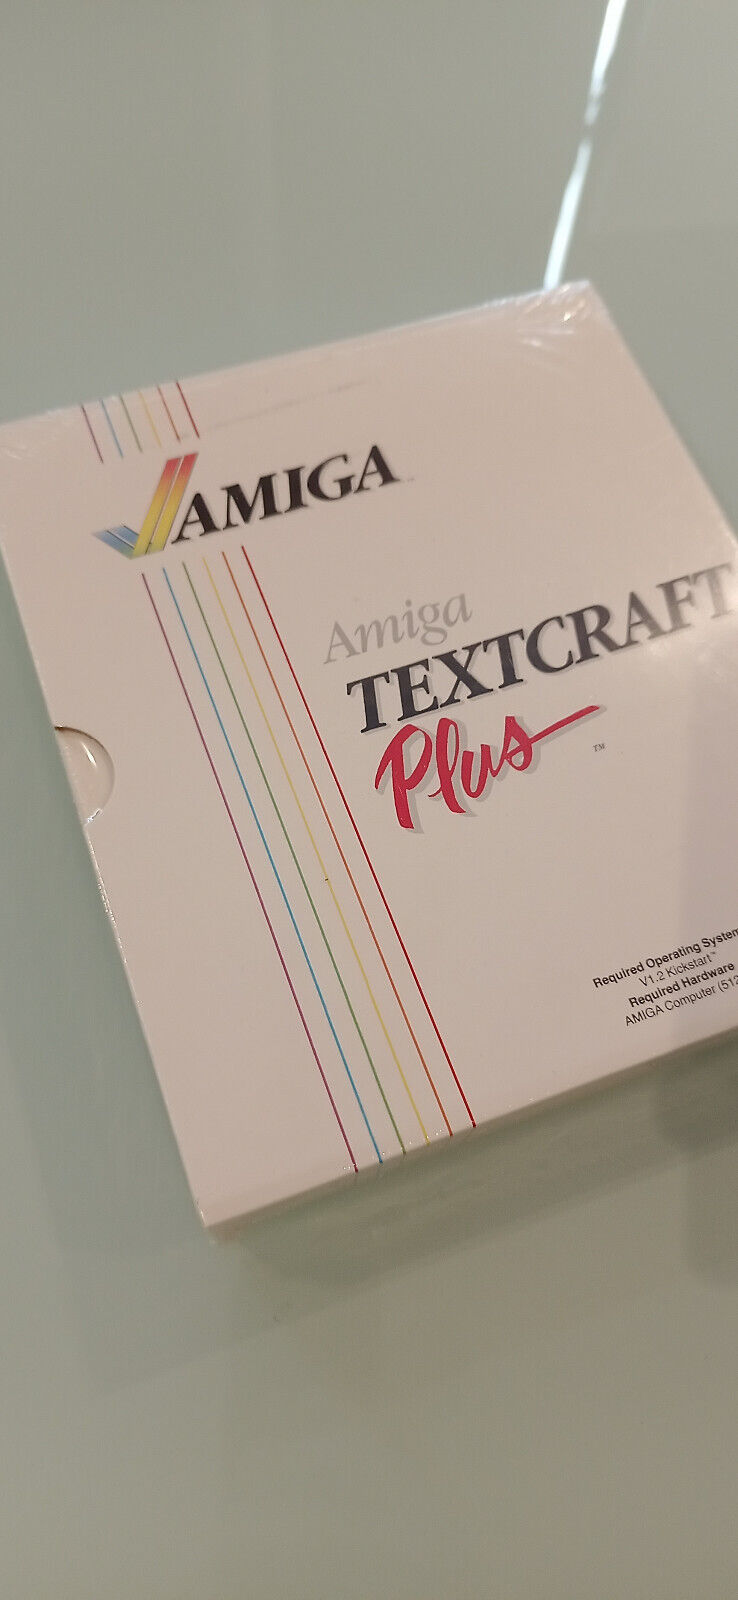 Amiga TEXTCRAFT Plus Software